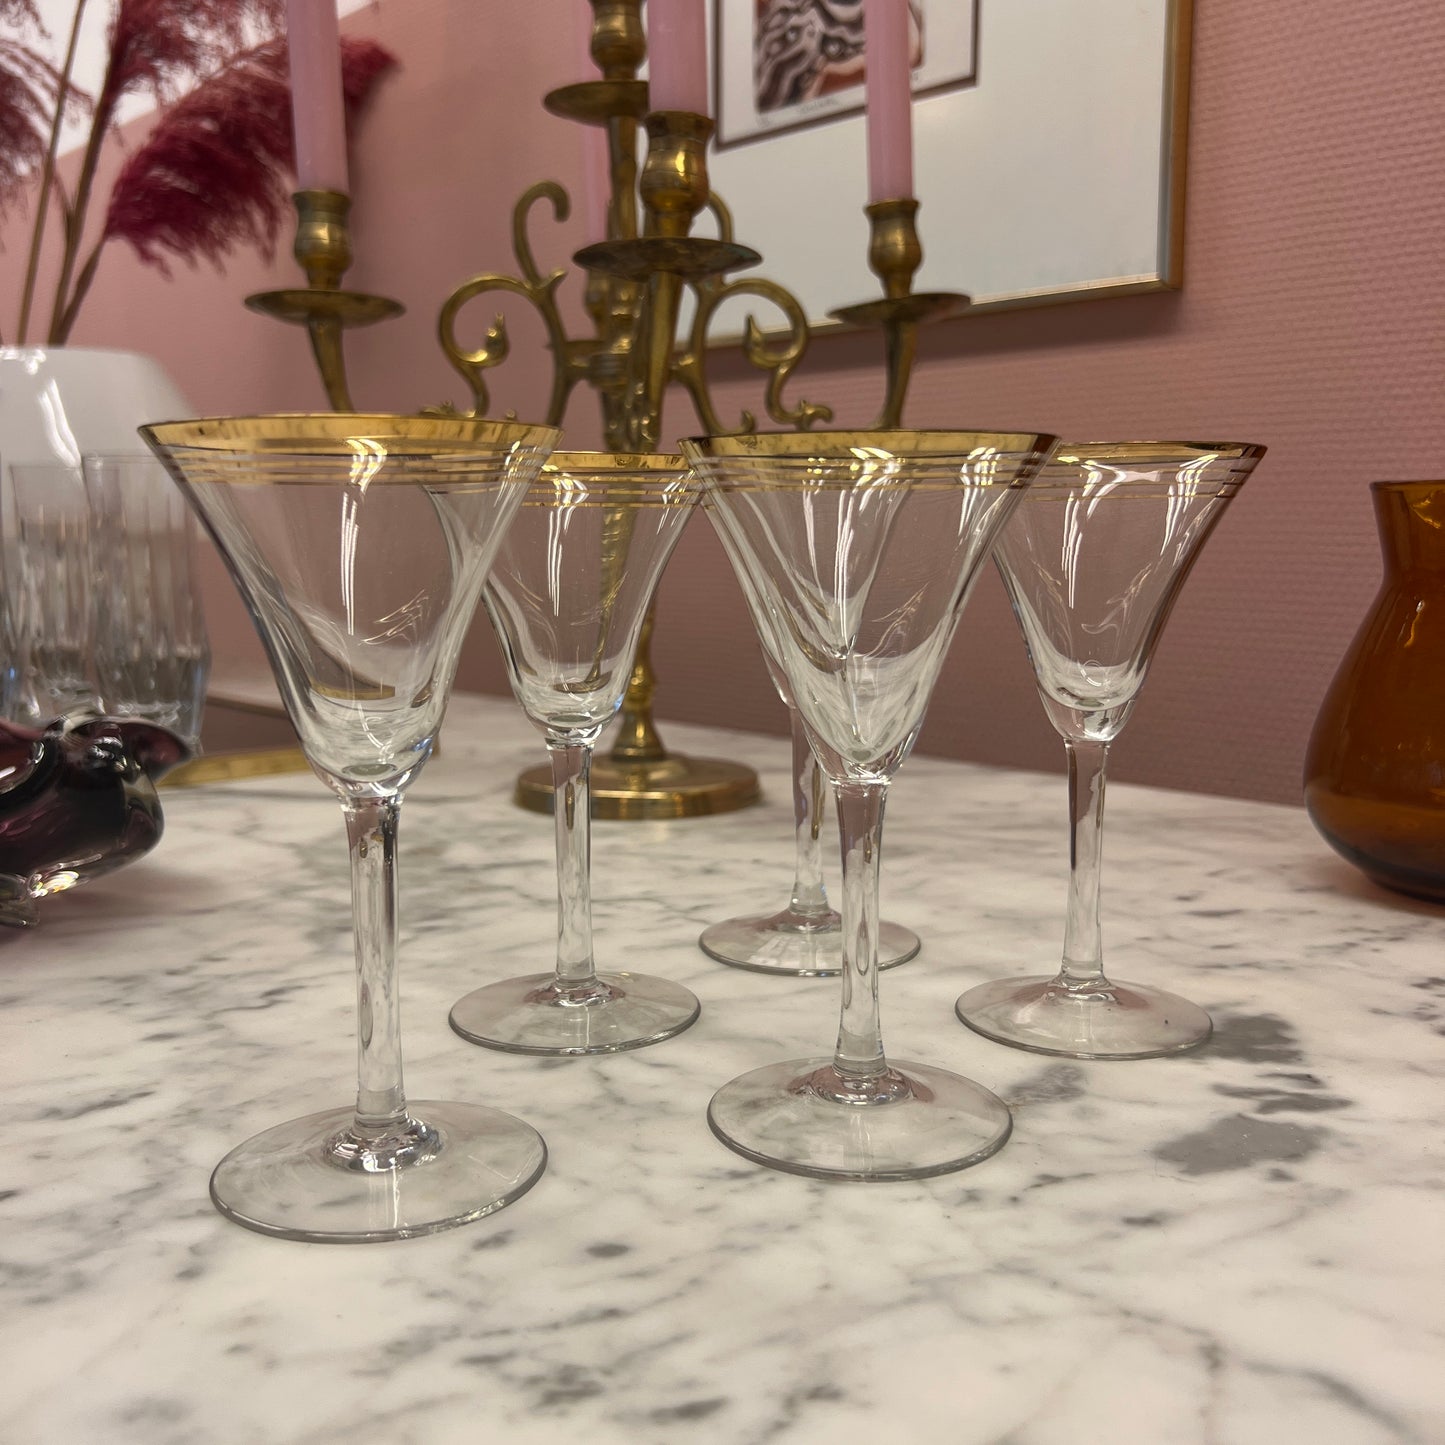 French liqueur glasses